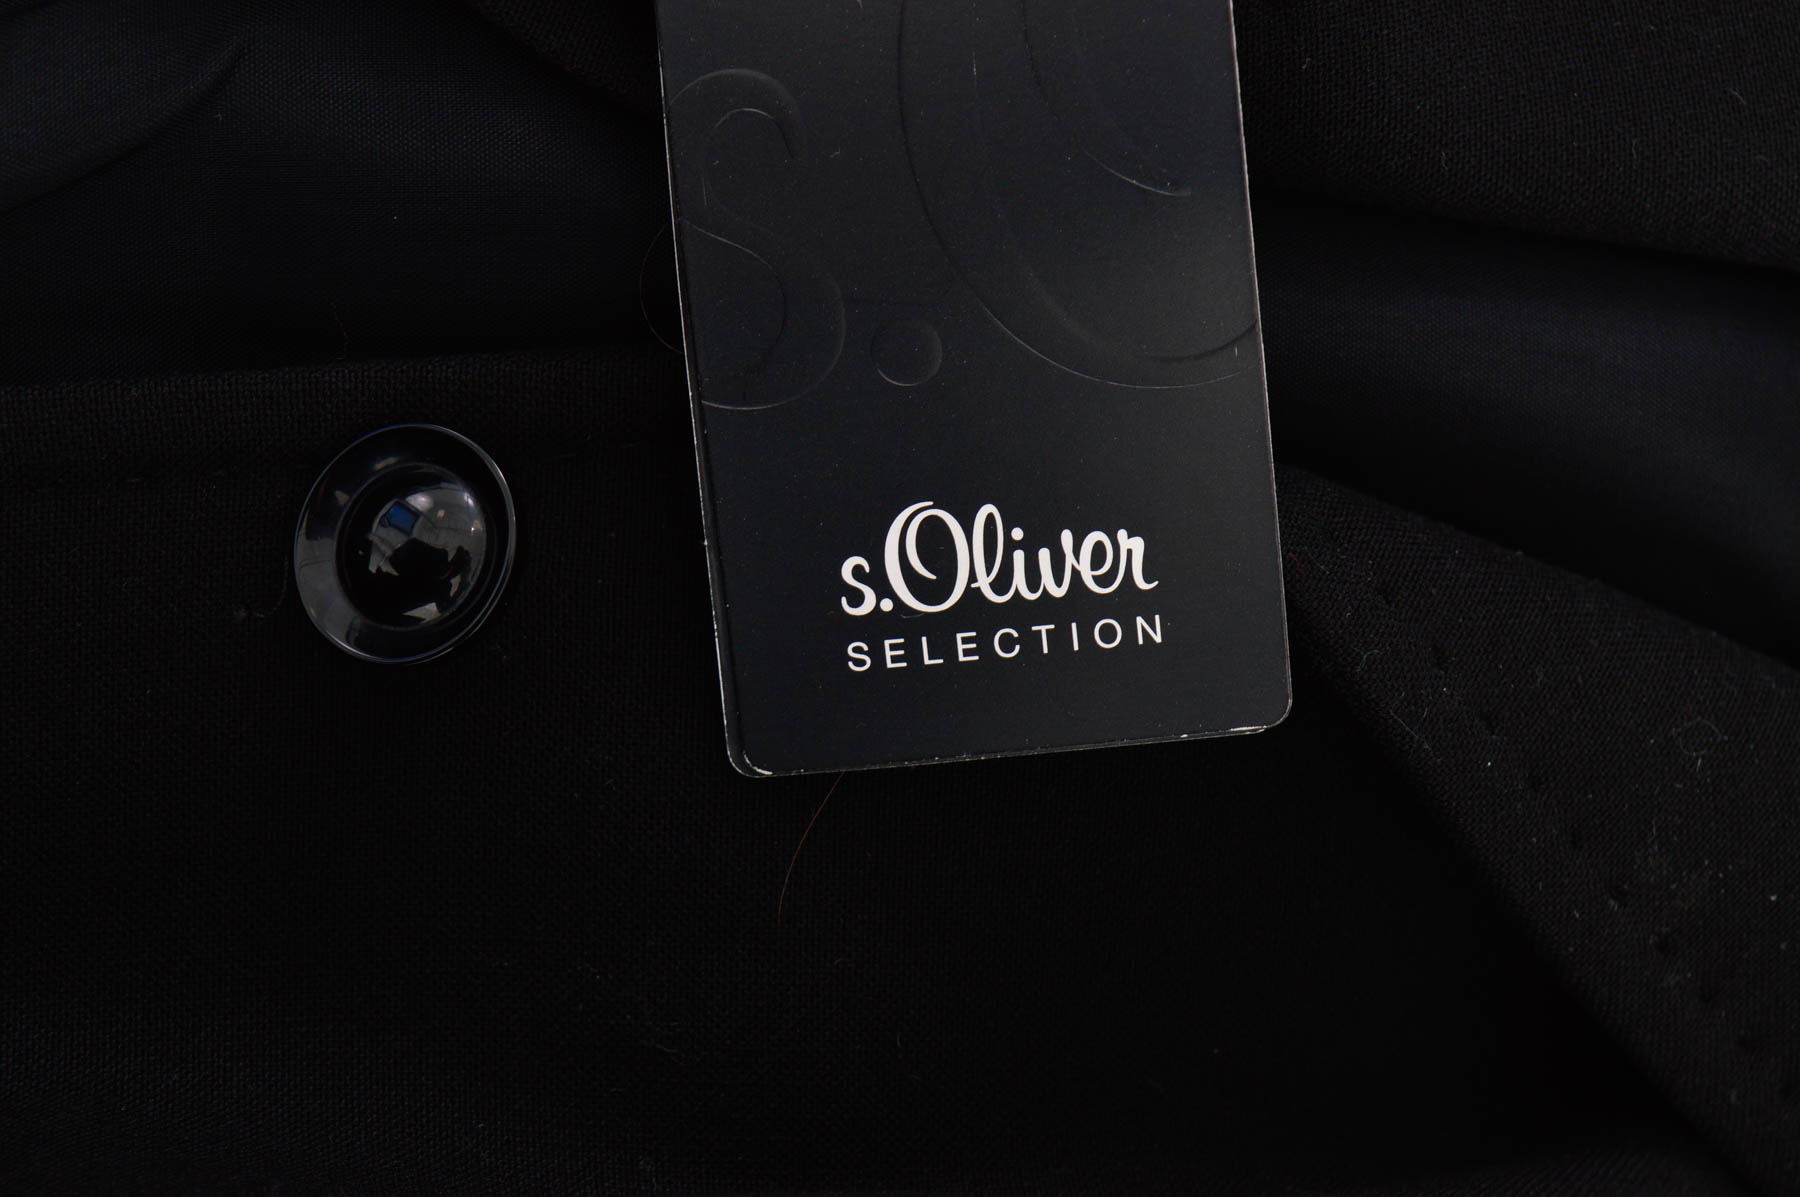 Women's blazer - S.Oliver - 2